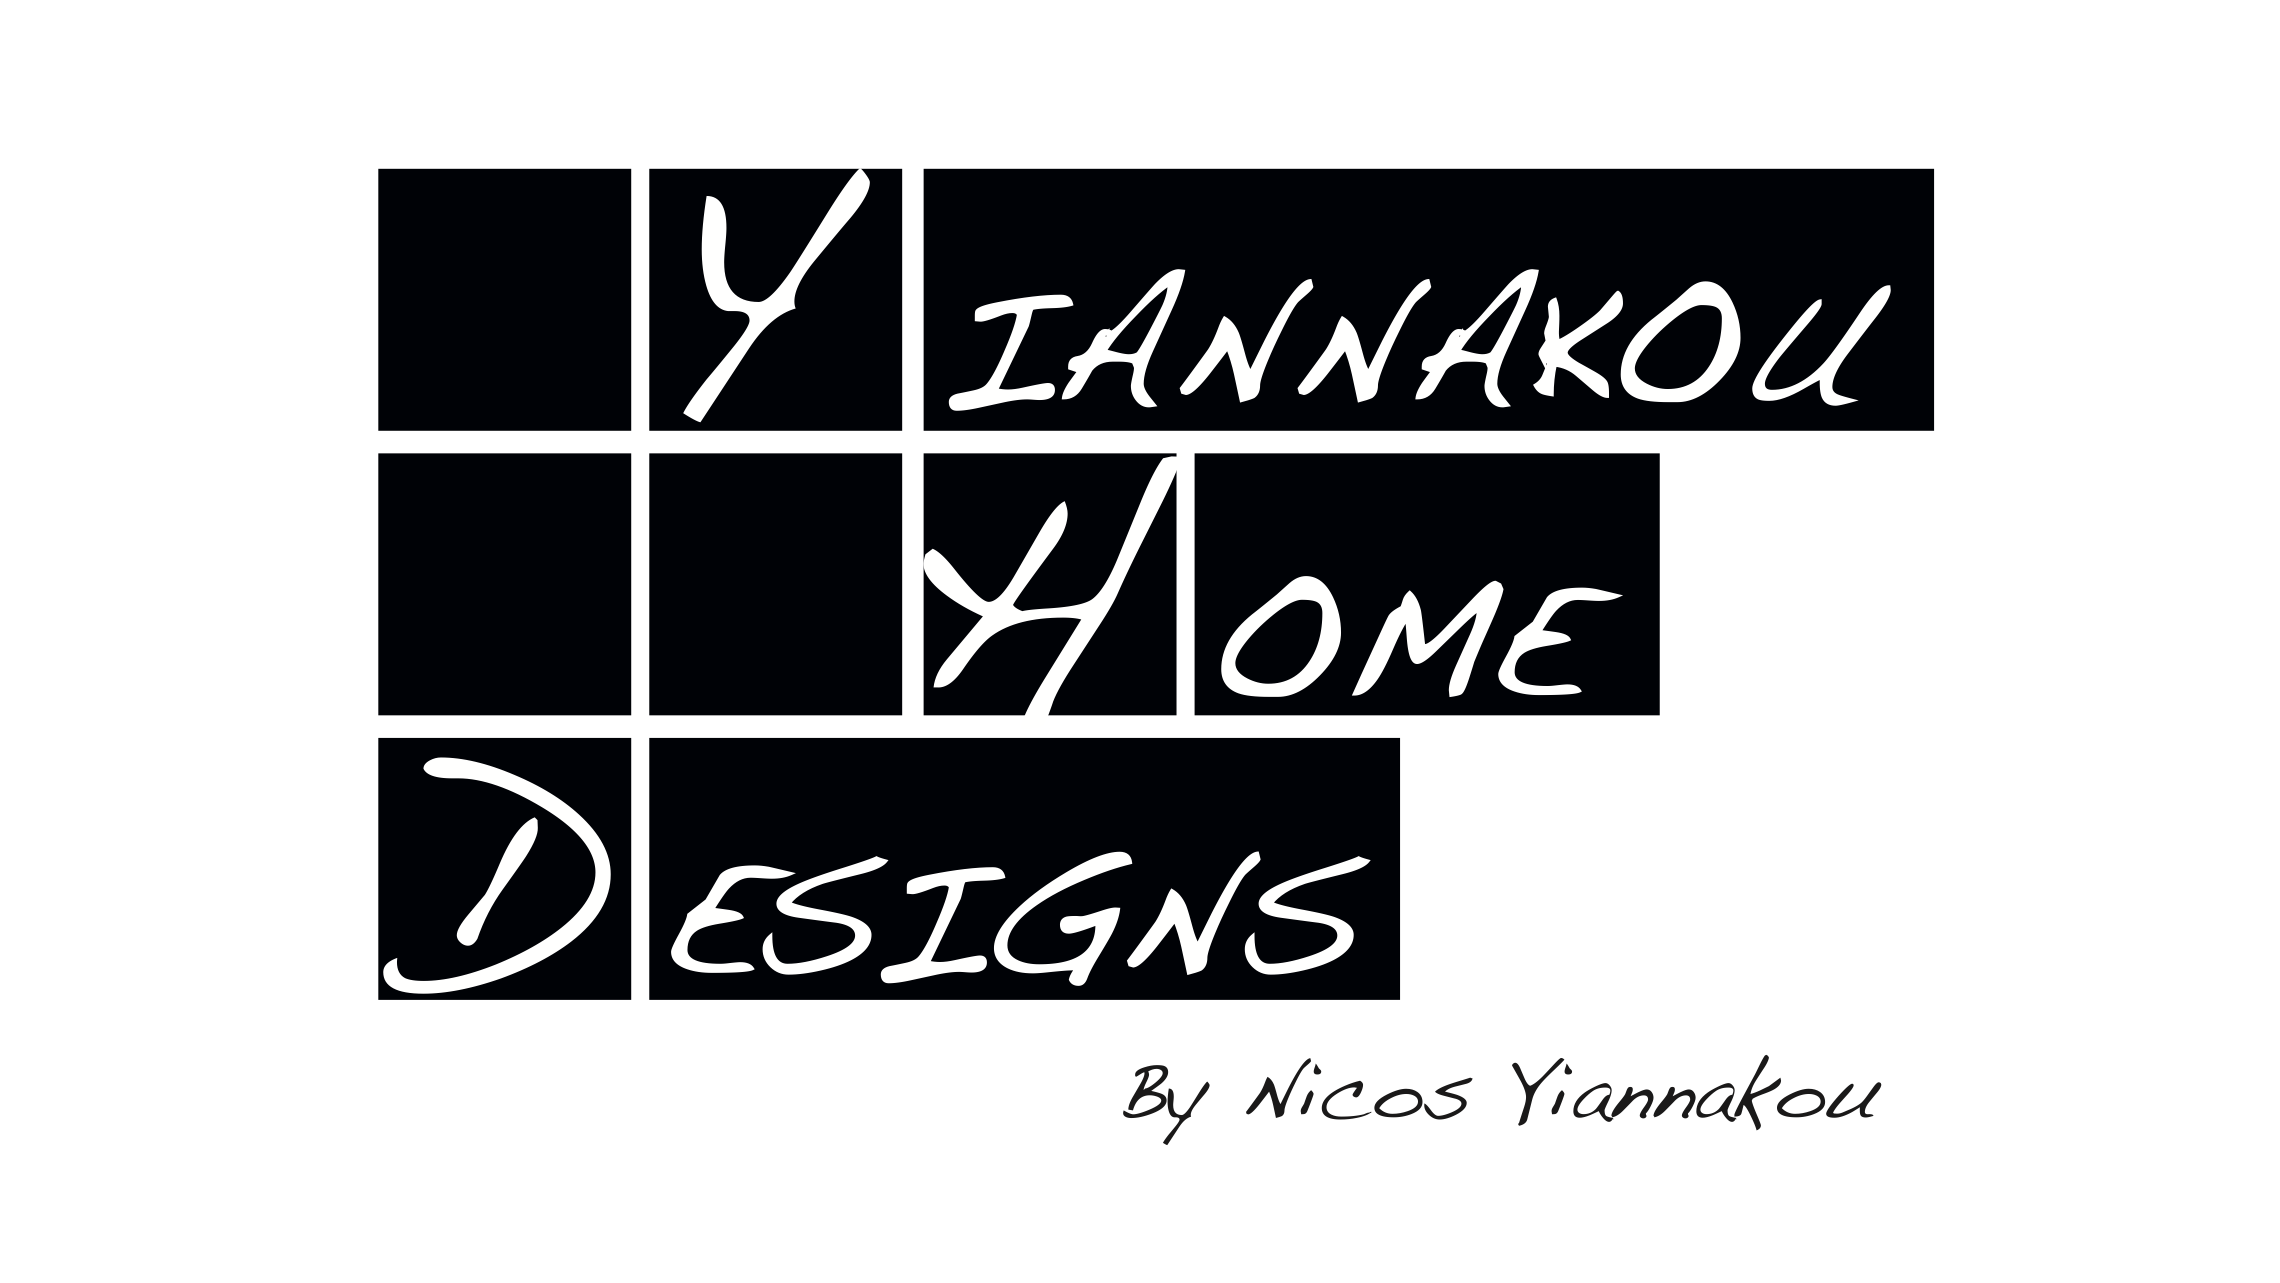 Yiannakou Home Designs LTD